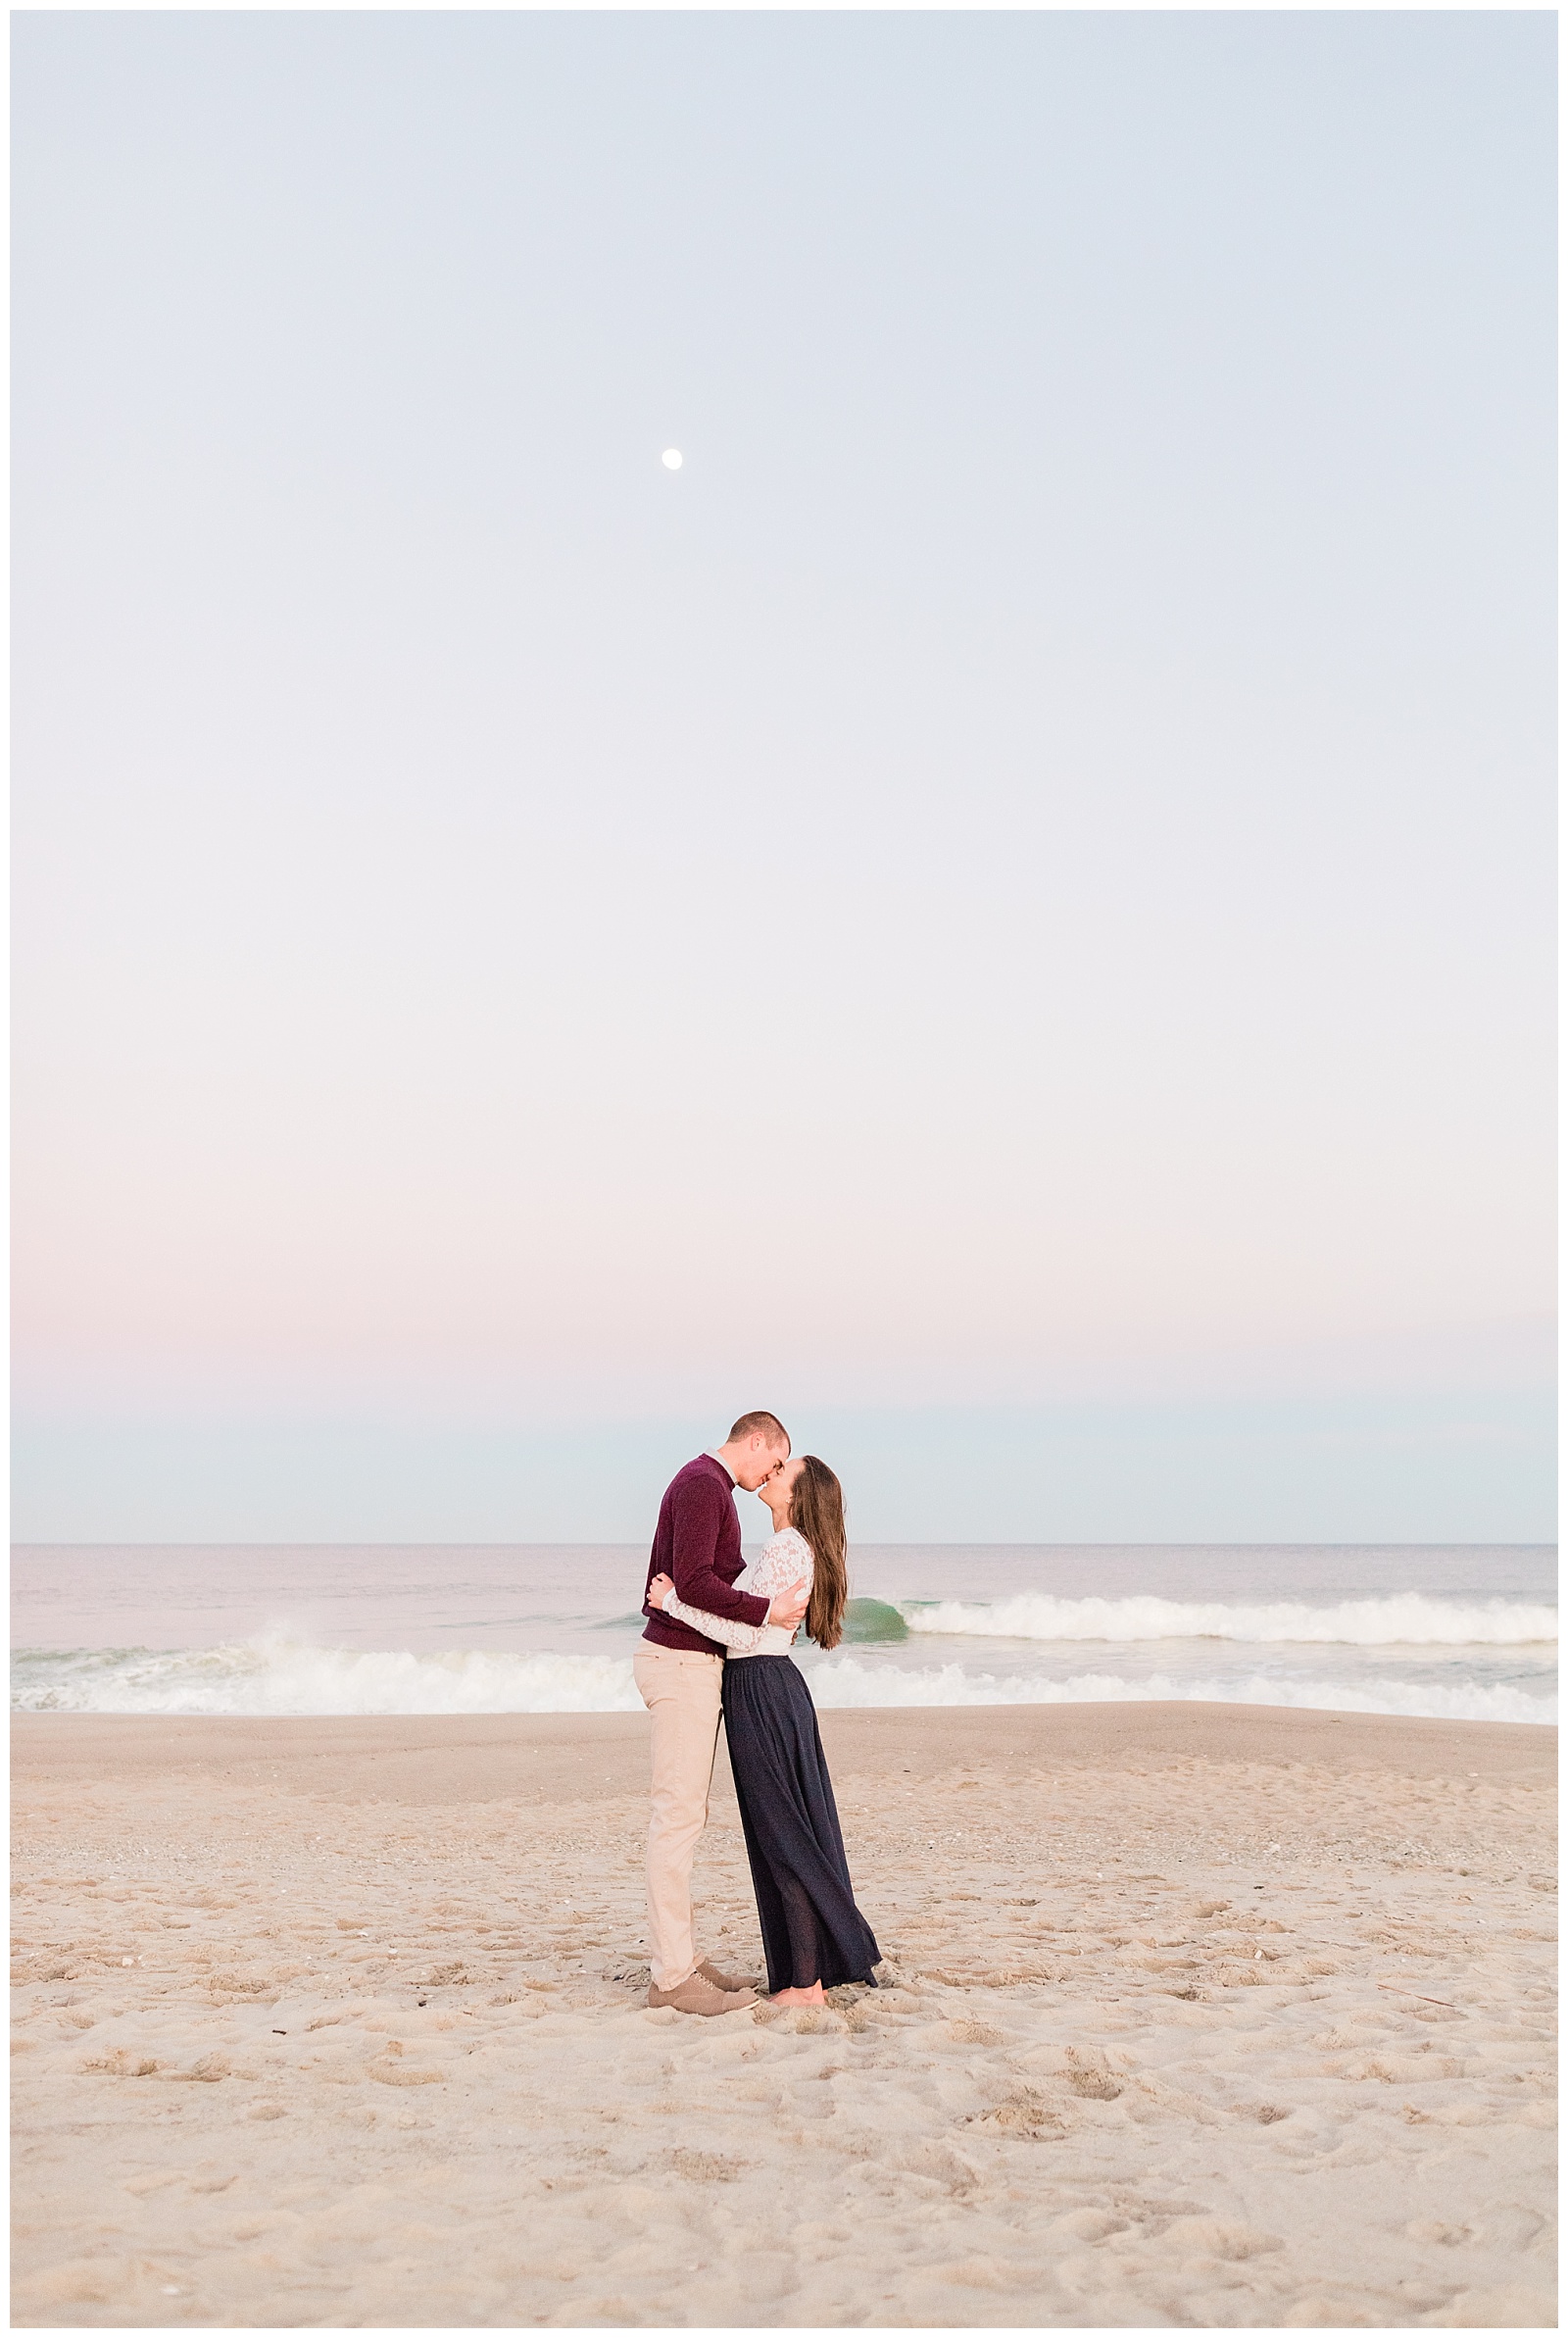 New Jersey, Engagement Session, Wedding Photographer, Beach, Sunset, Shore, Moon, Romantic, Dusk, Engaged